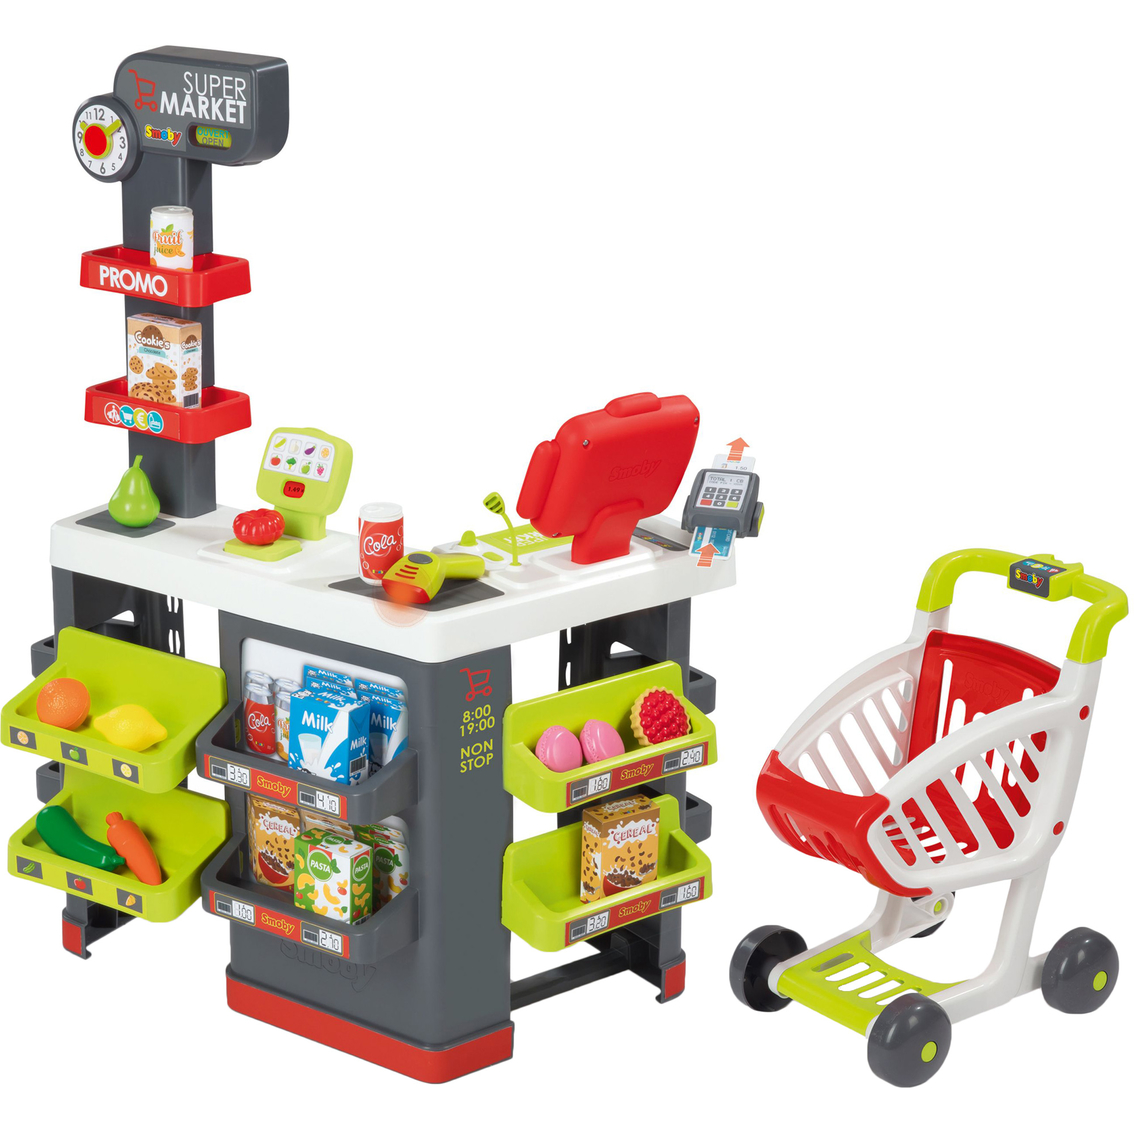 Smoby Toys Super Market Set - Image 2 of 6